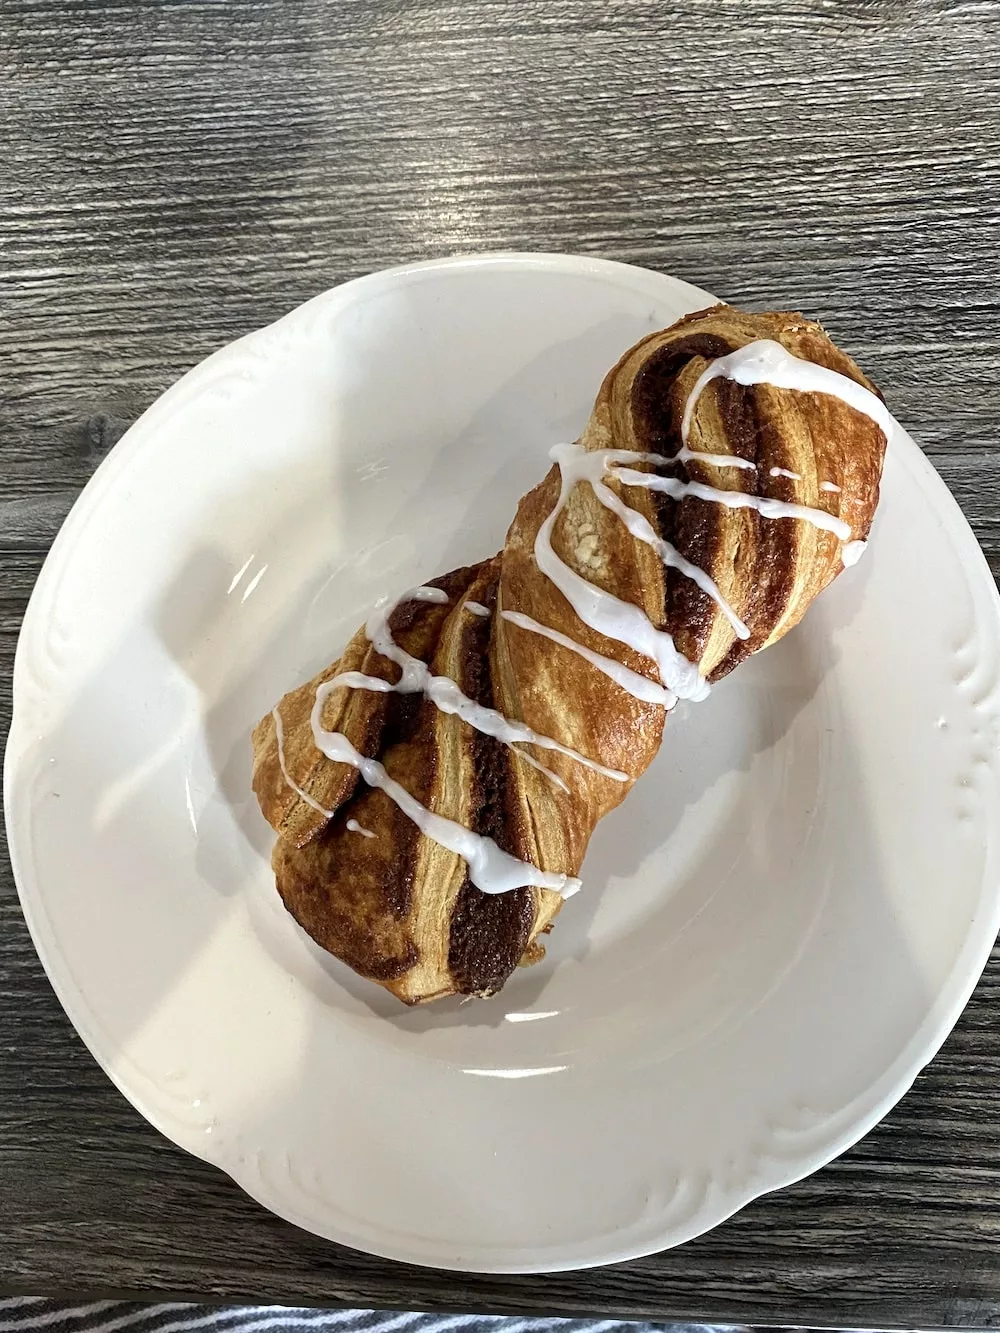 Cinnamon twist pastry from The Bakery on Broadway in Audubon, Iowa